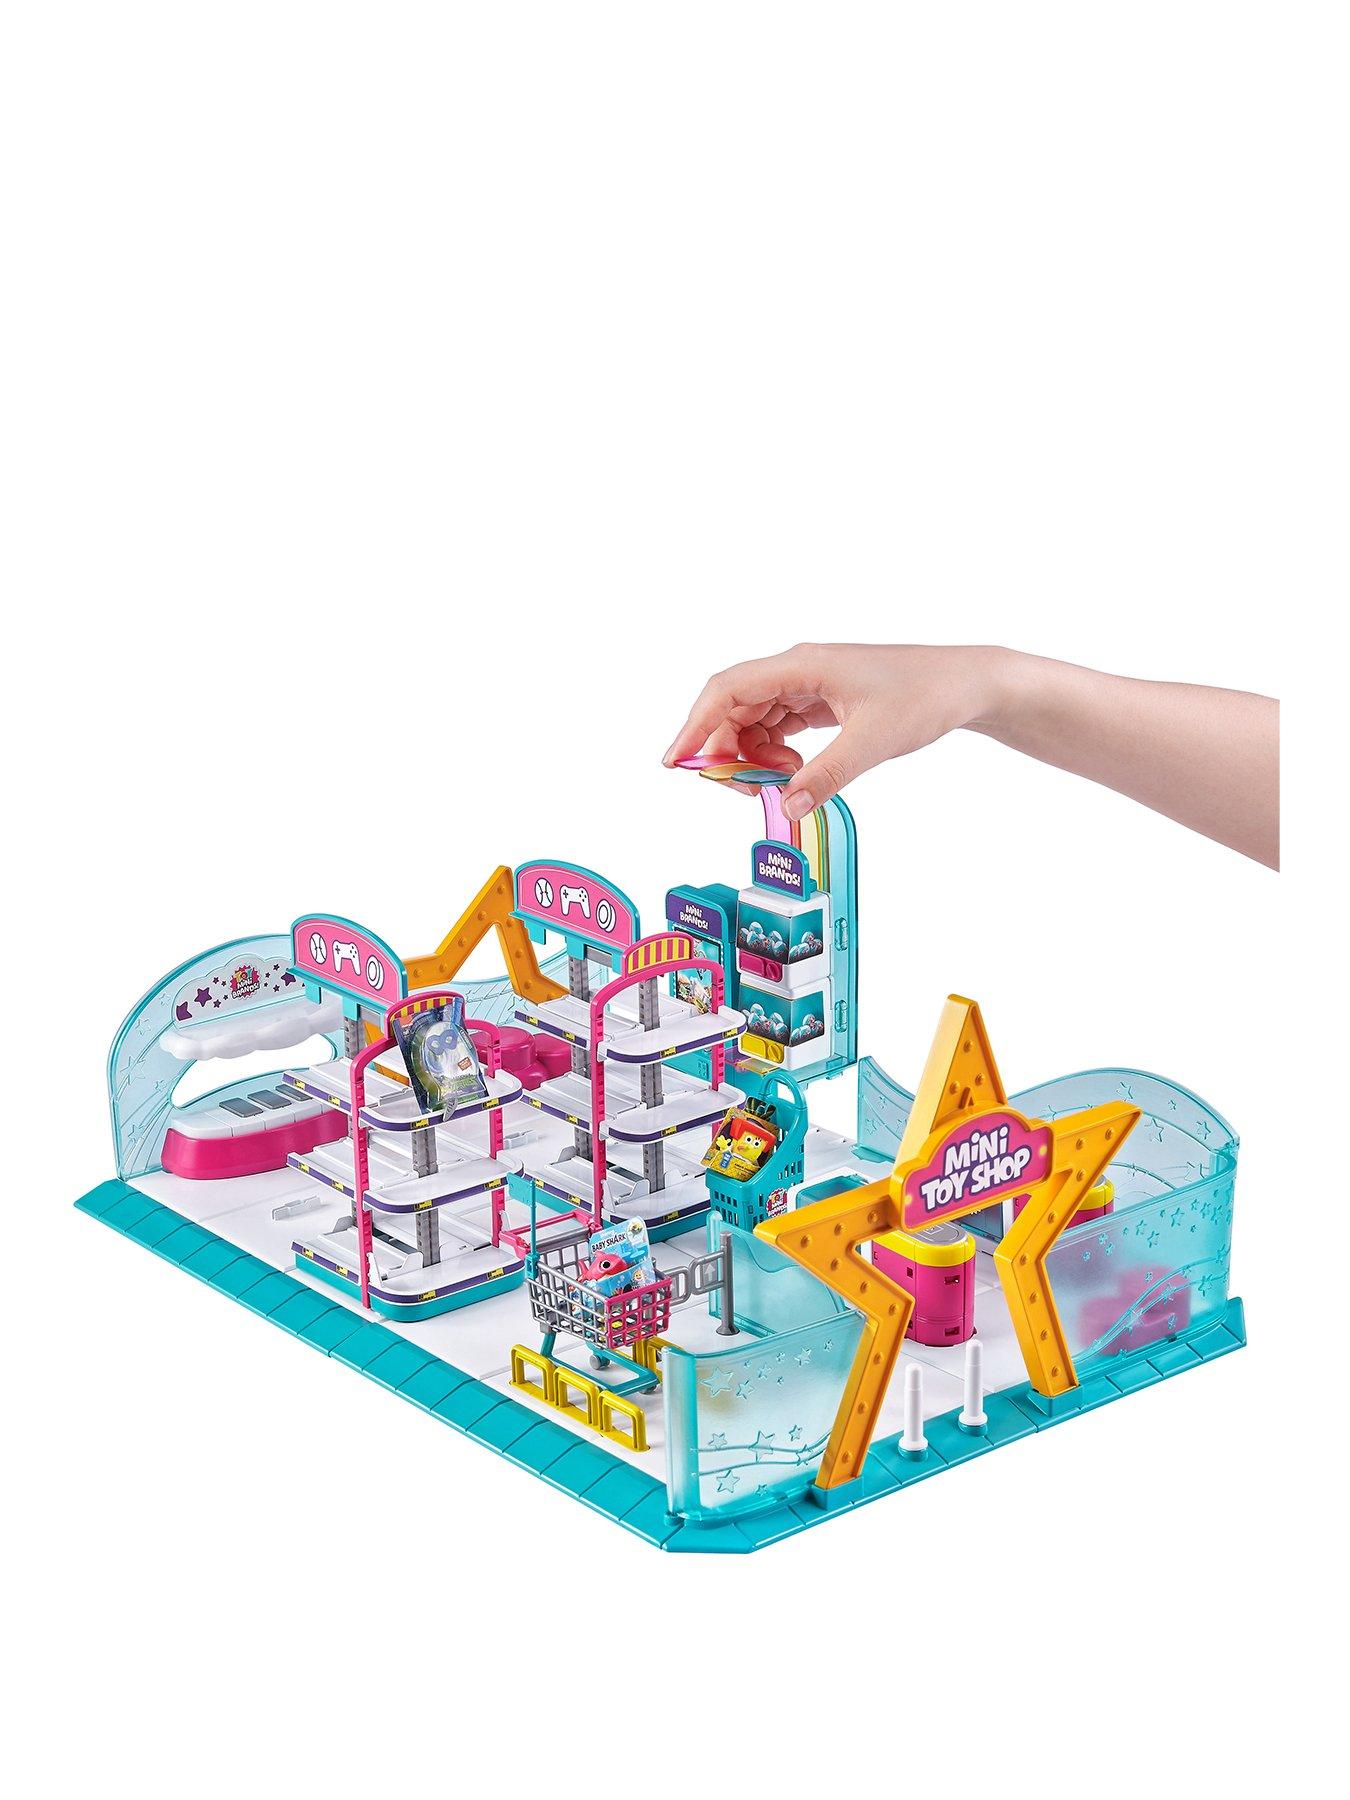 Mini Brands Chest Freezer for Mini Brands 5 Surprise Toys Shopkins